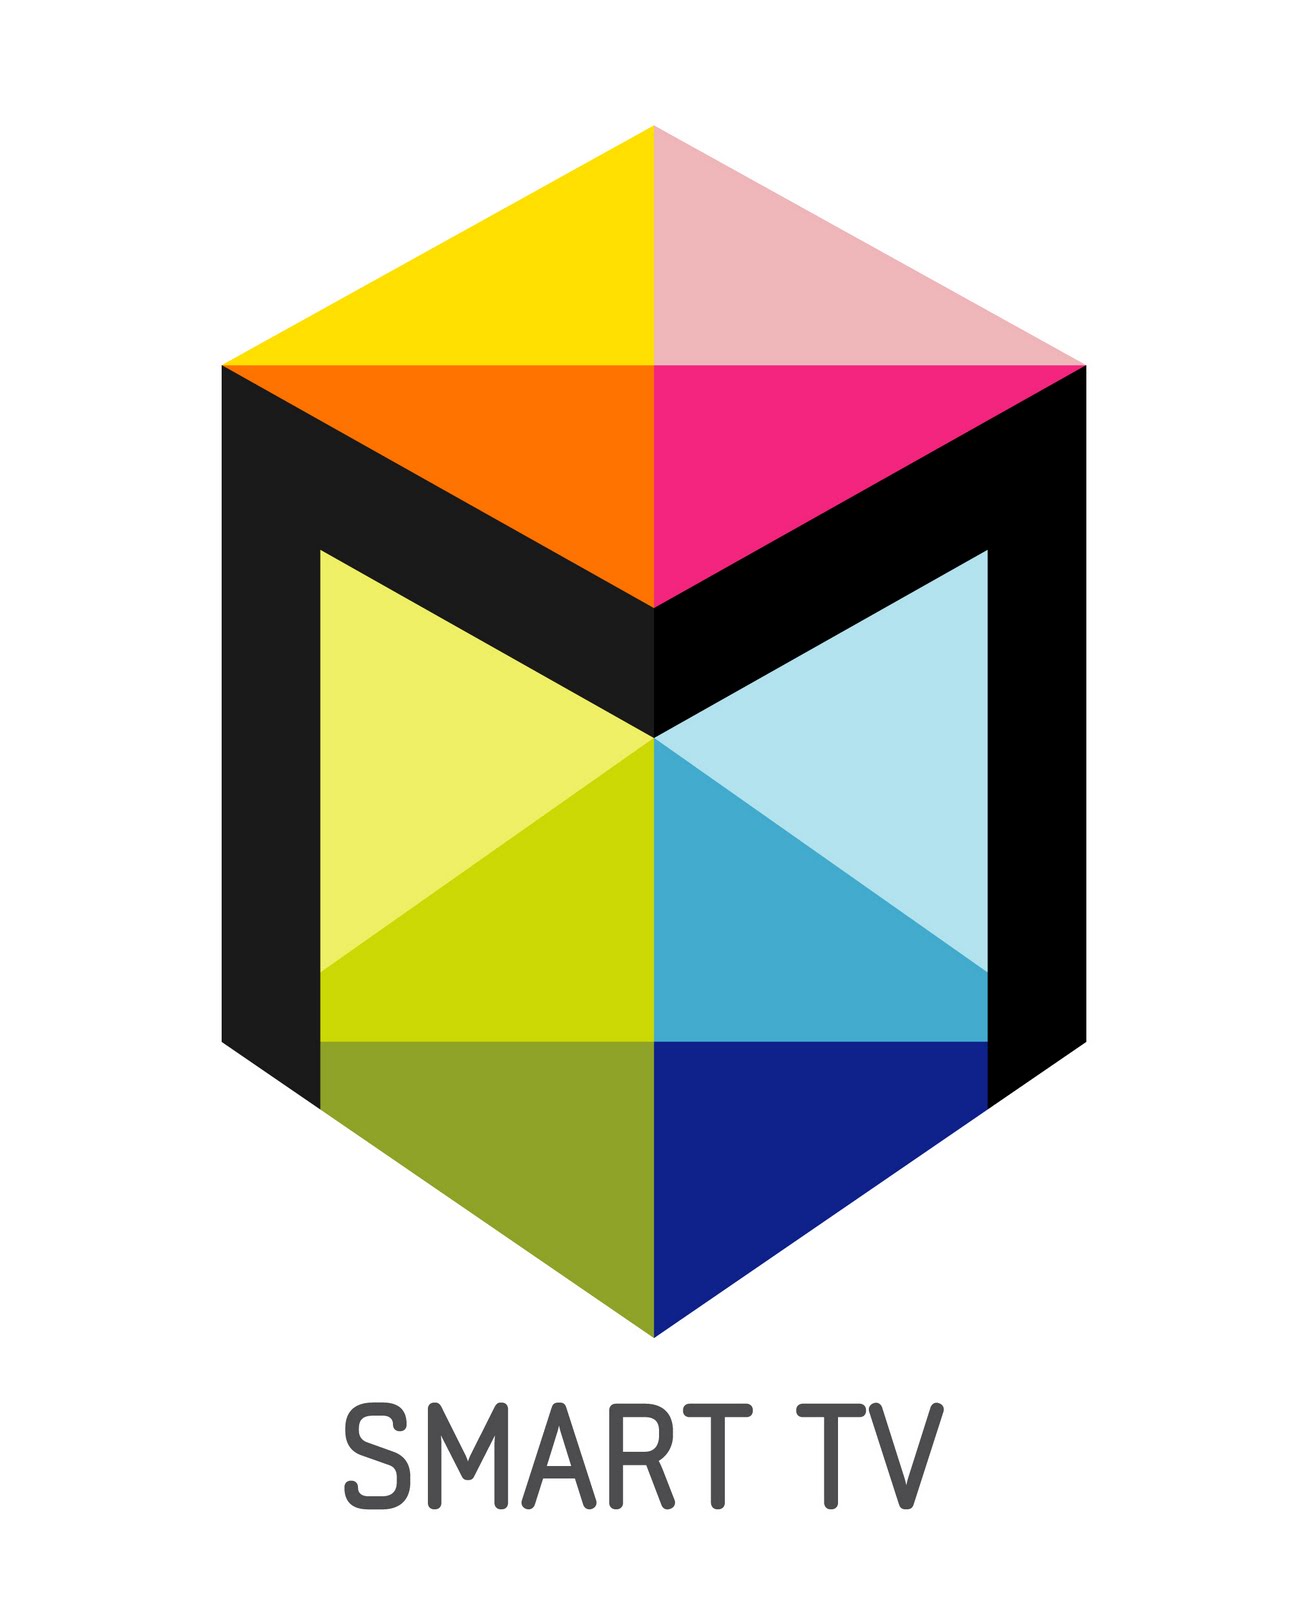 All "Smart" Multisystem TVs